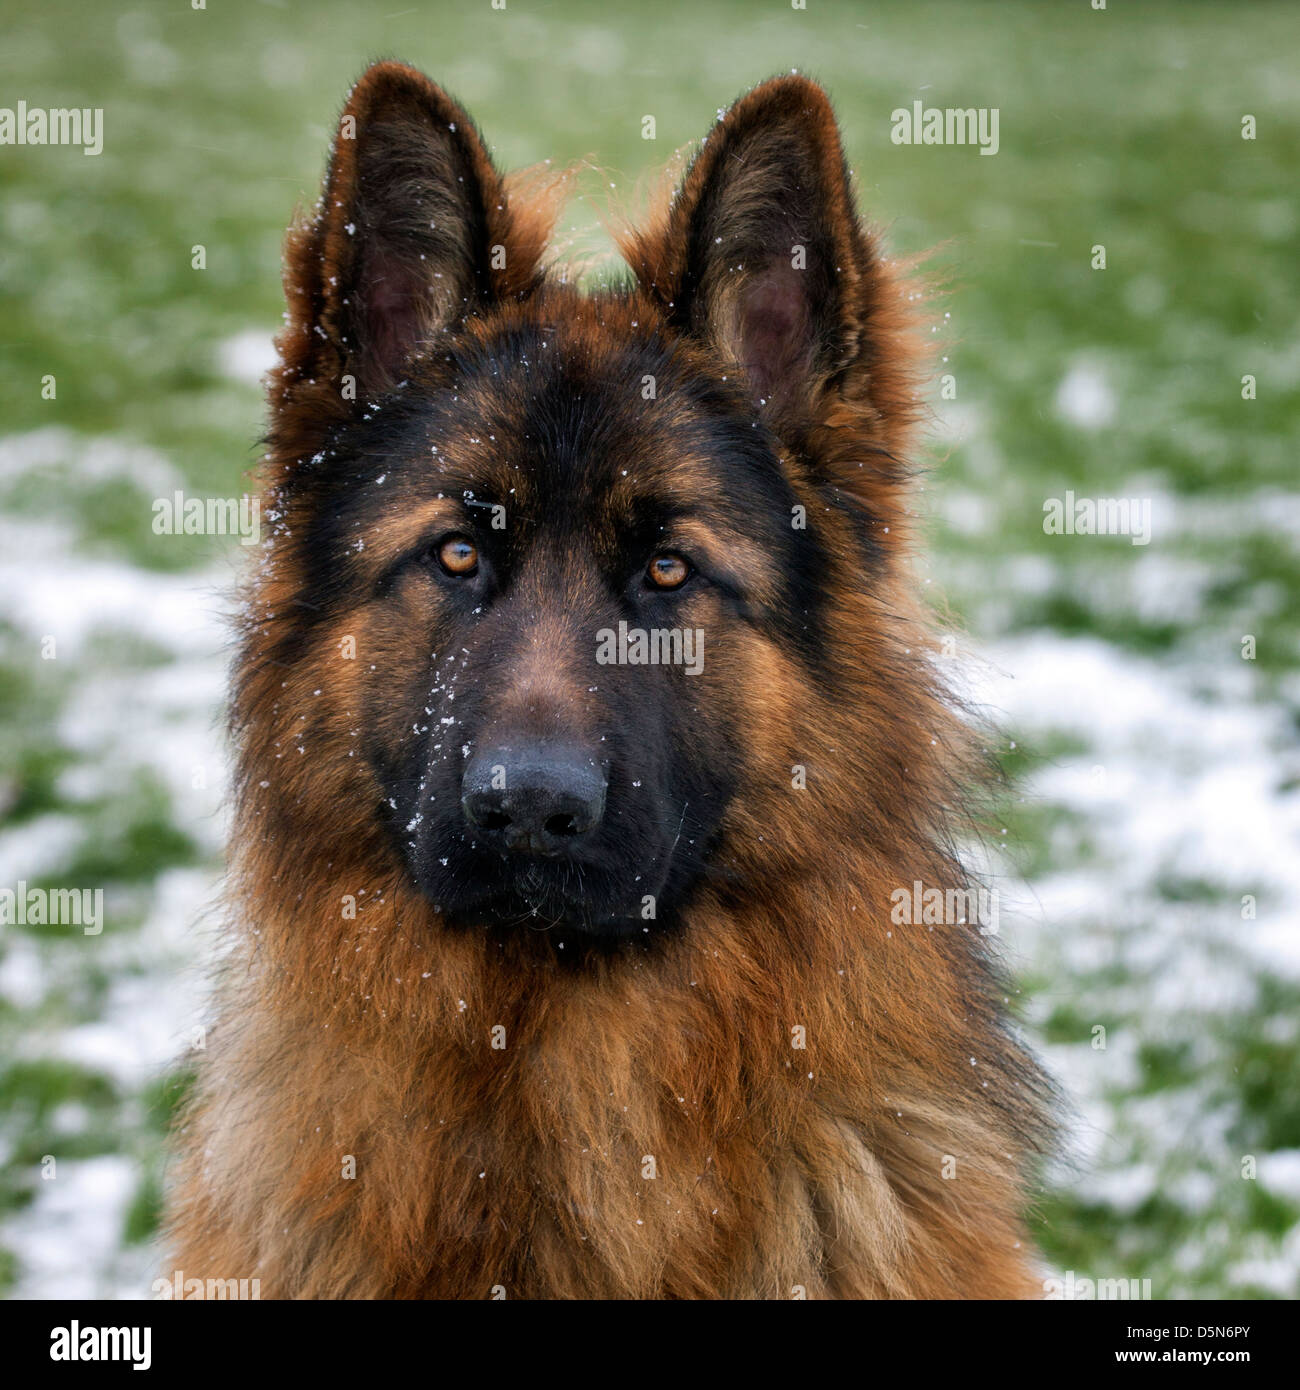 Alsatian / German Shepherd dog (Canis lupus familiaris) in garden during snow shower in winter Stock Photo